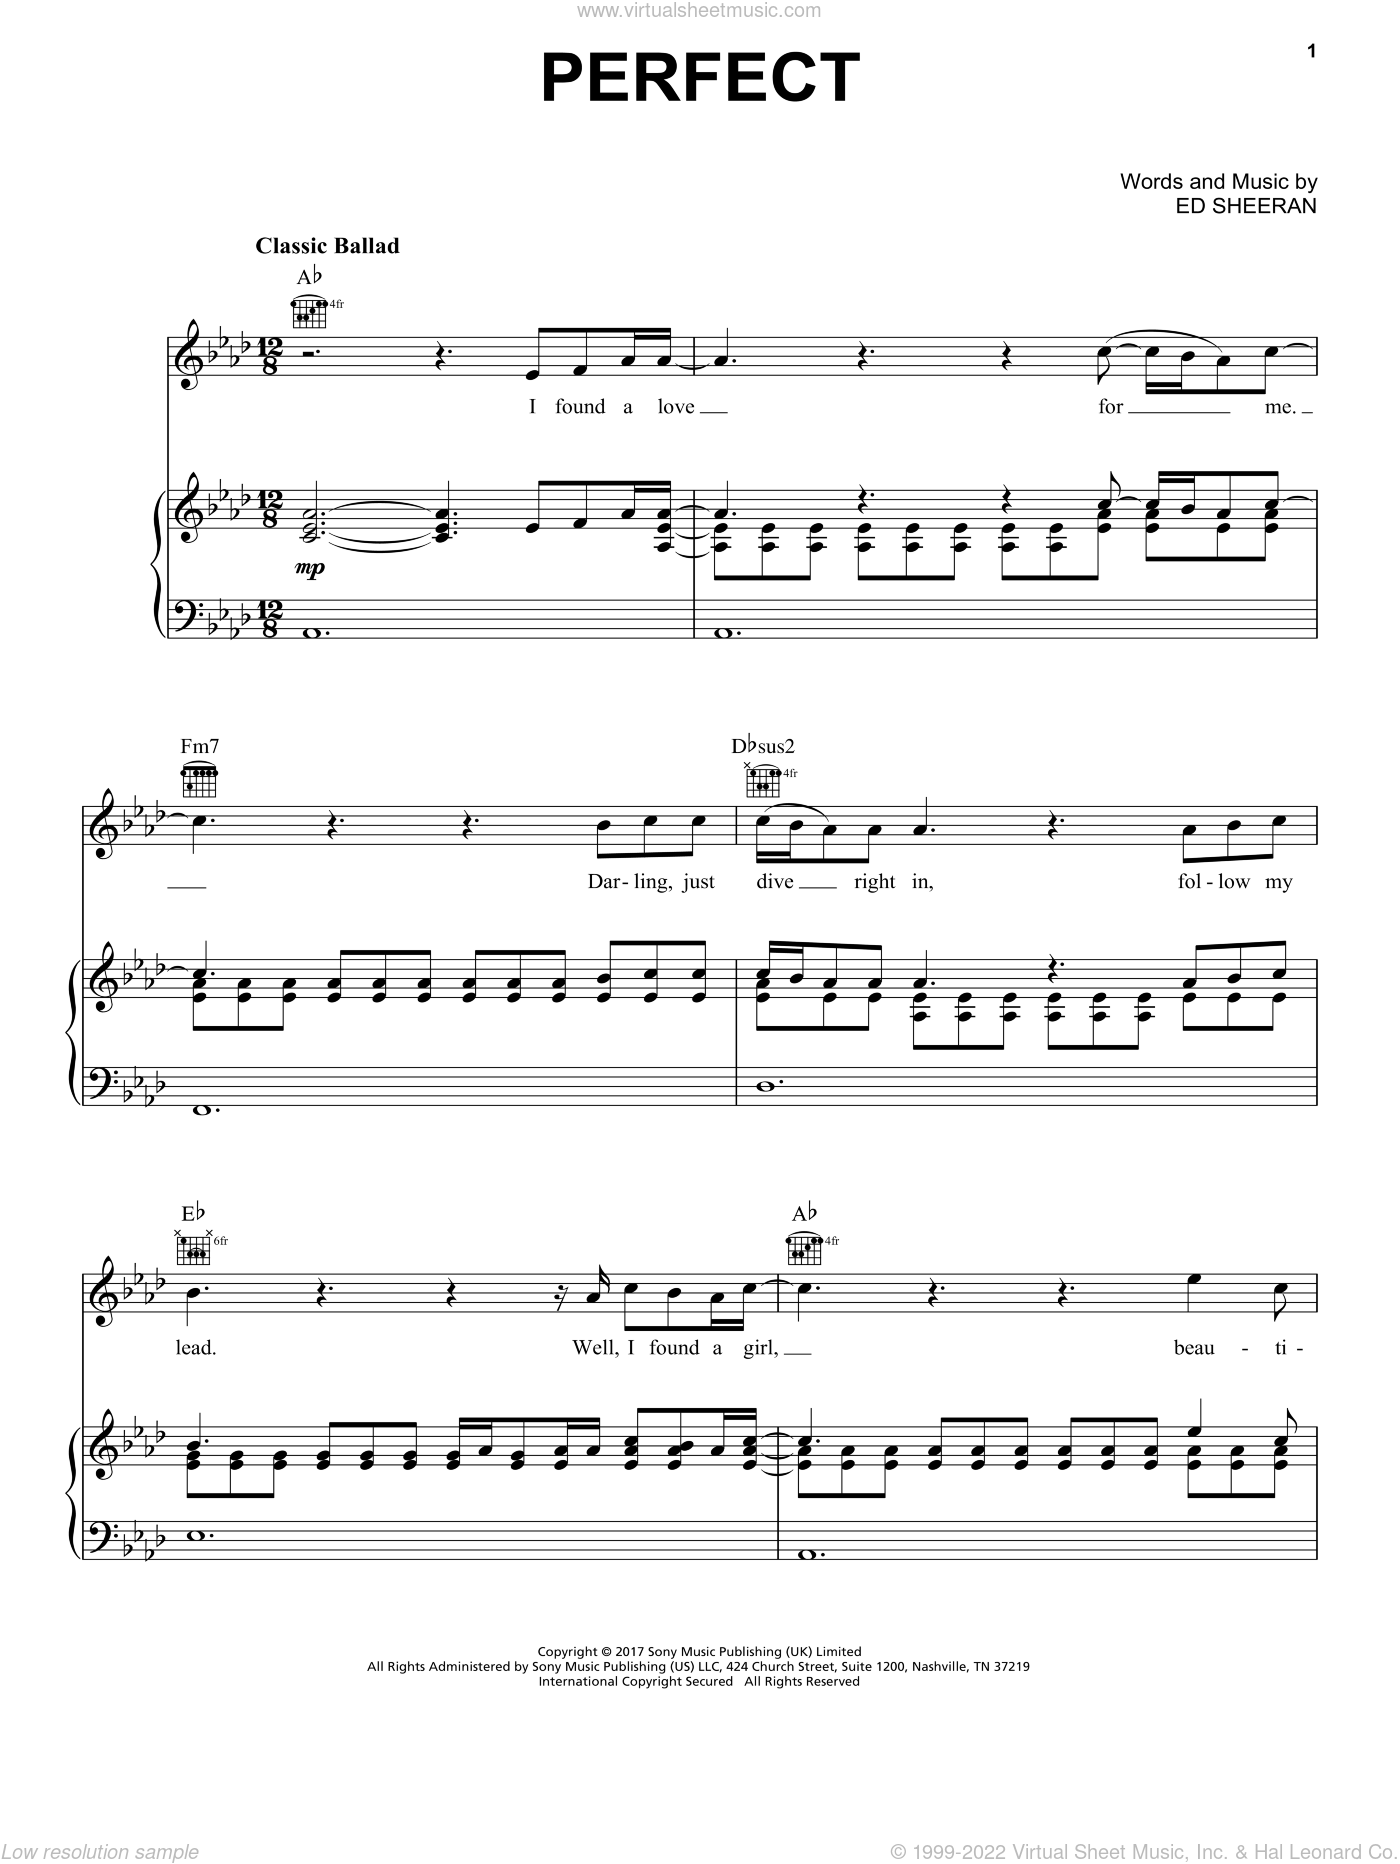 Sheeran - Perfect sheet music for voice, piano or guitar PDF